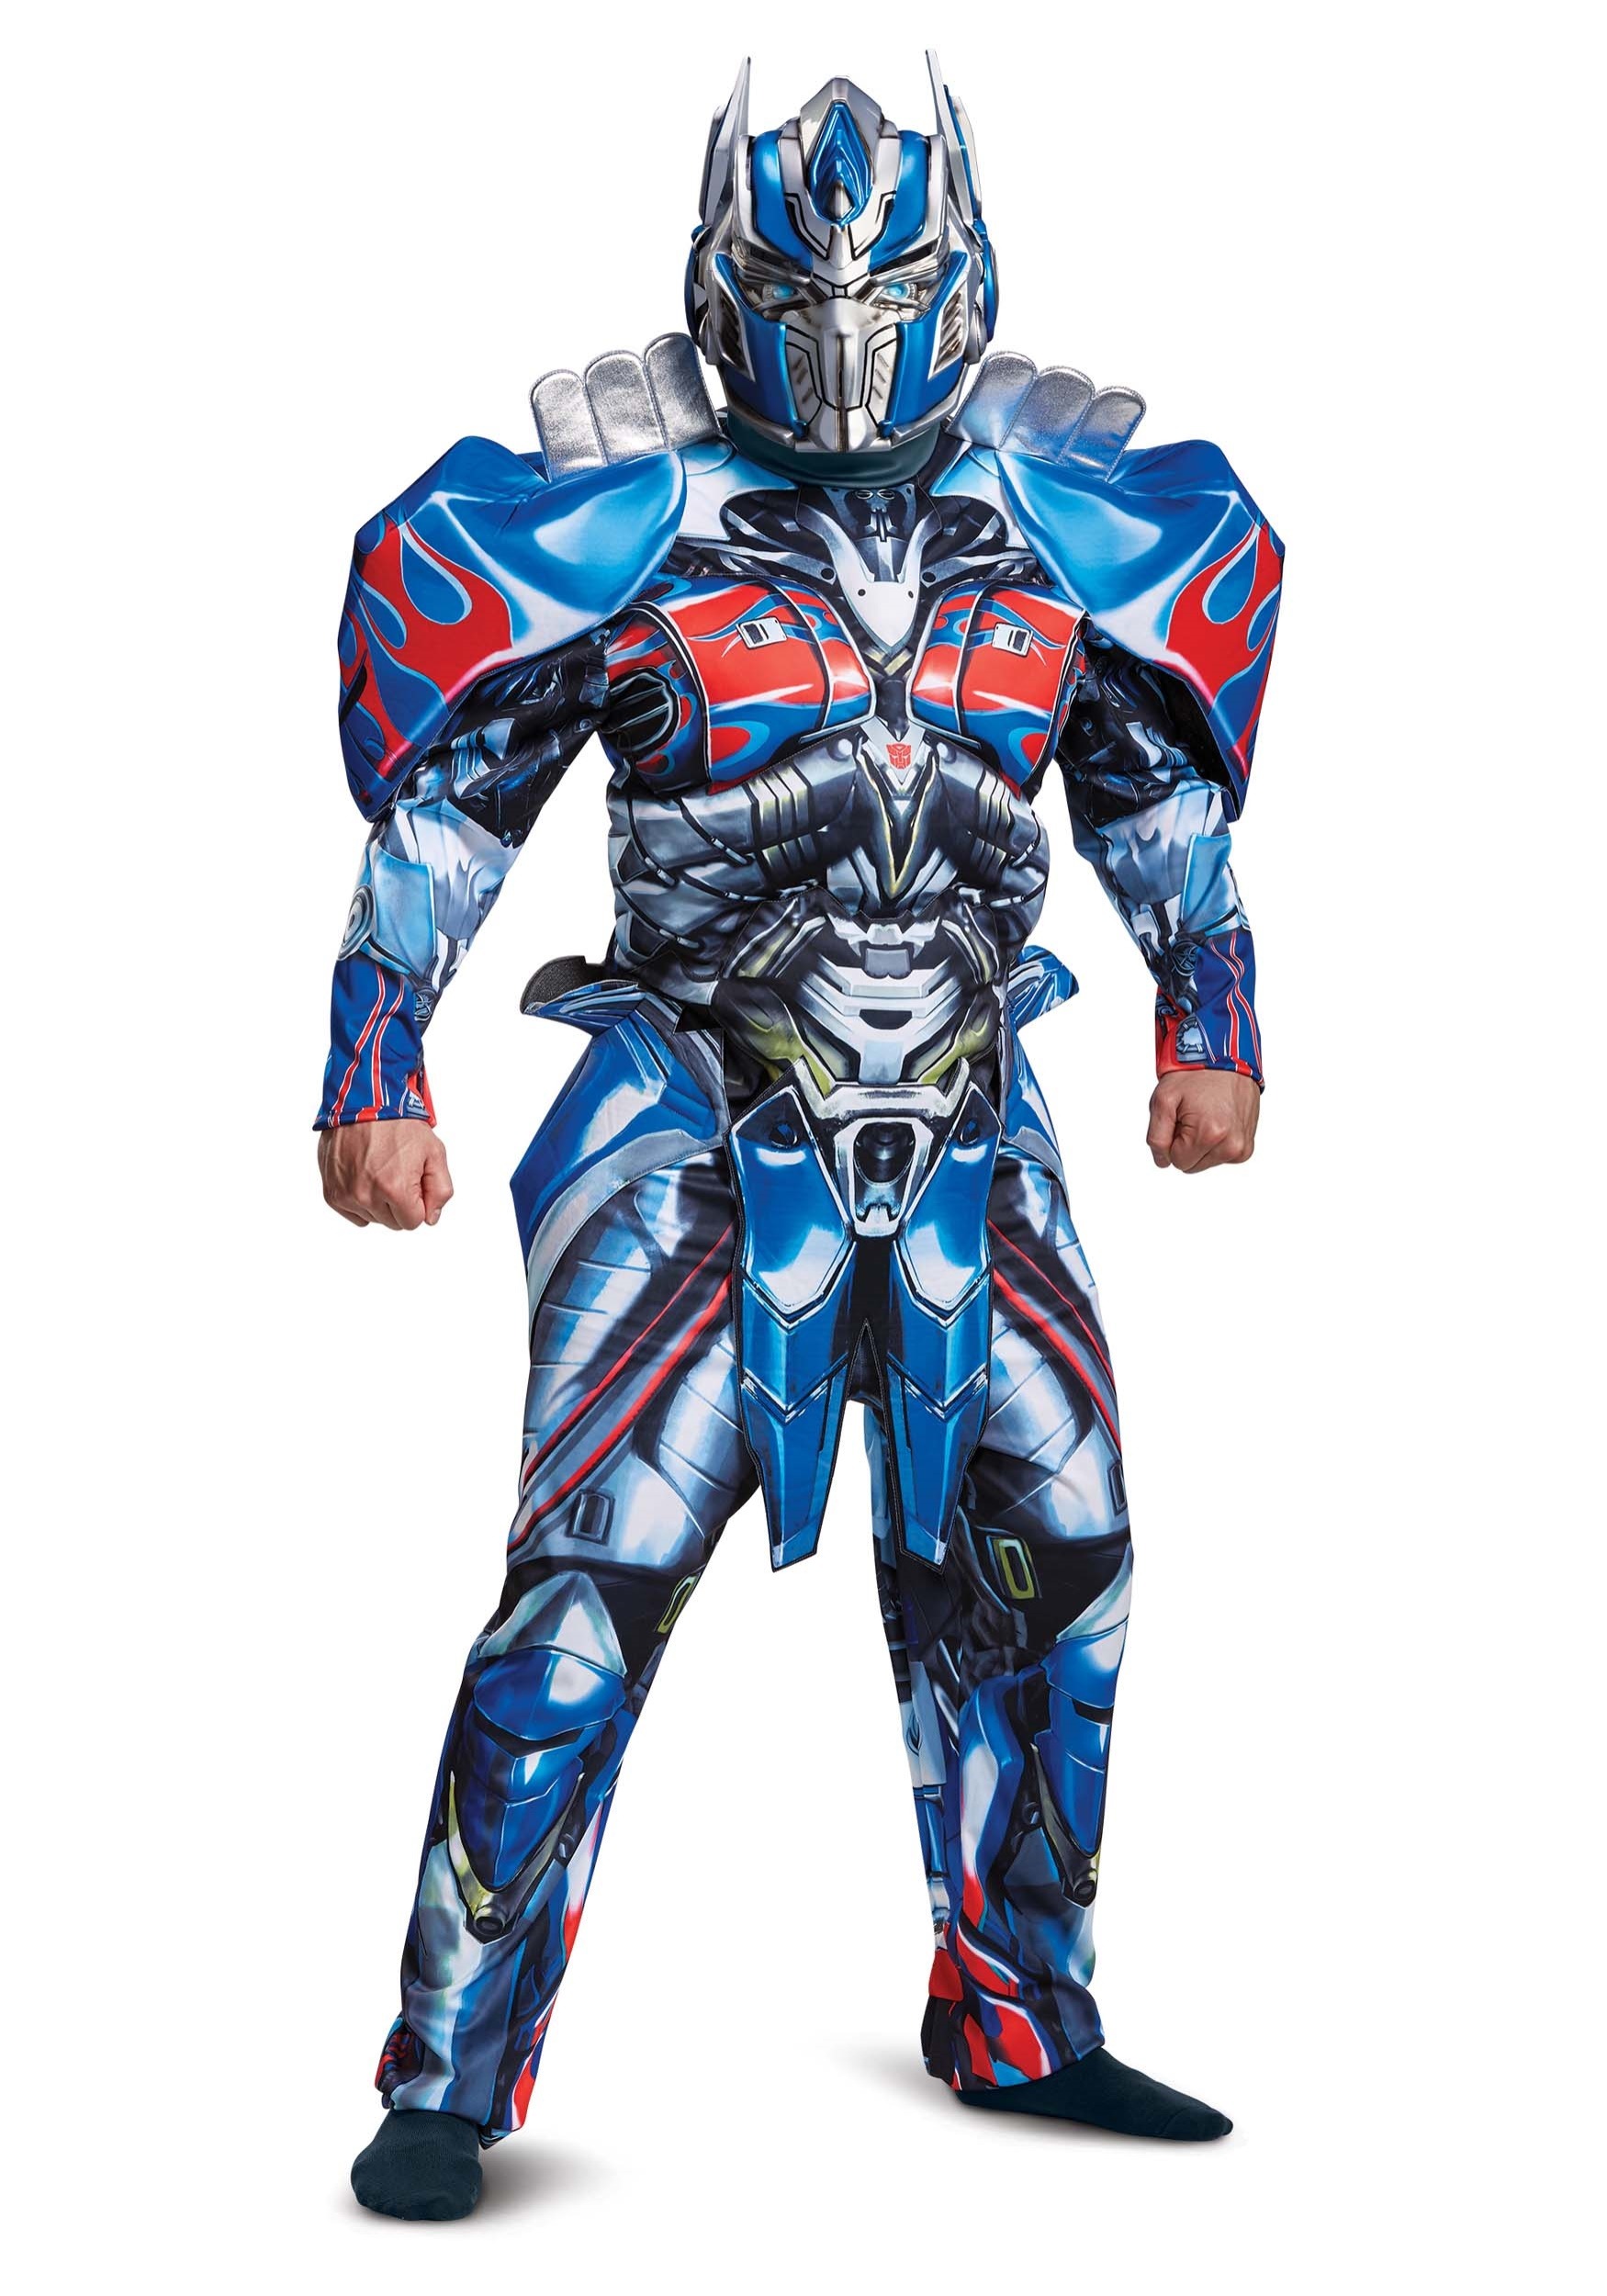 Image of Adult Transformers 5 Deluxe Optimus Prime Costume ID DI22462-XXL